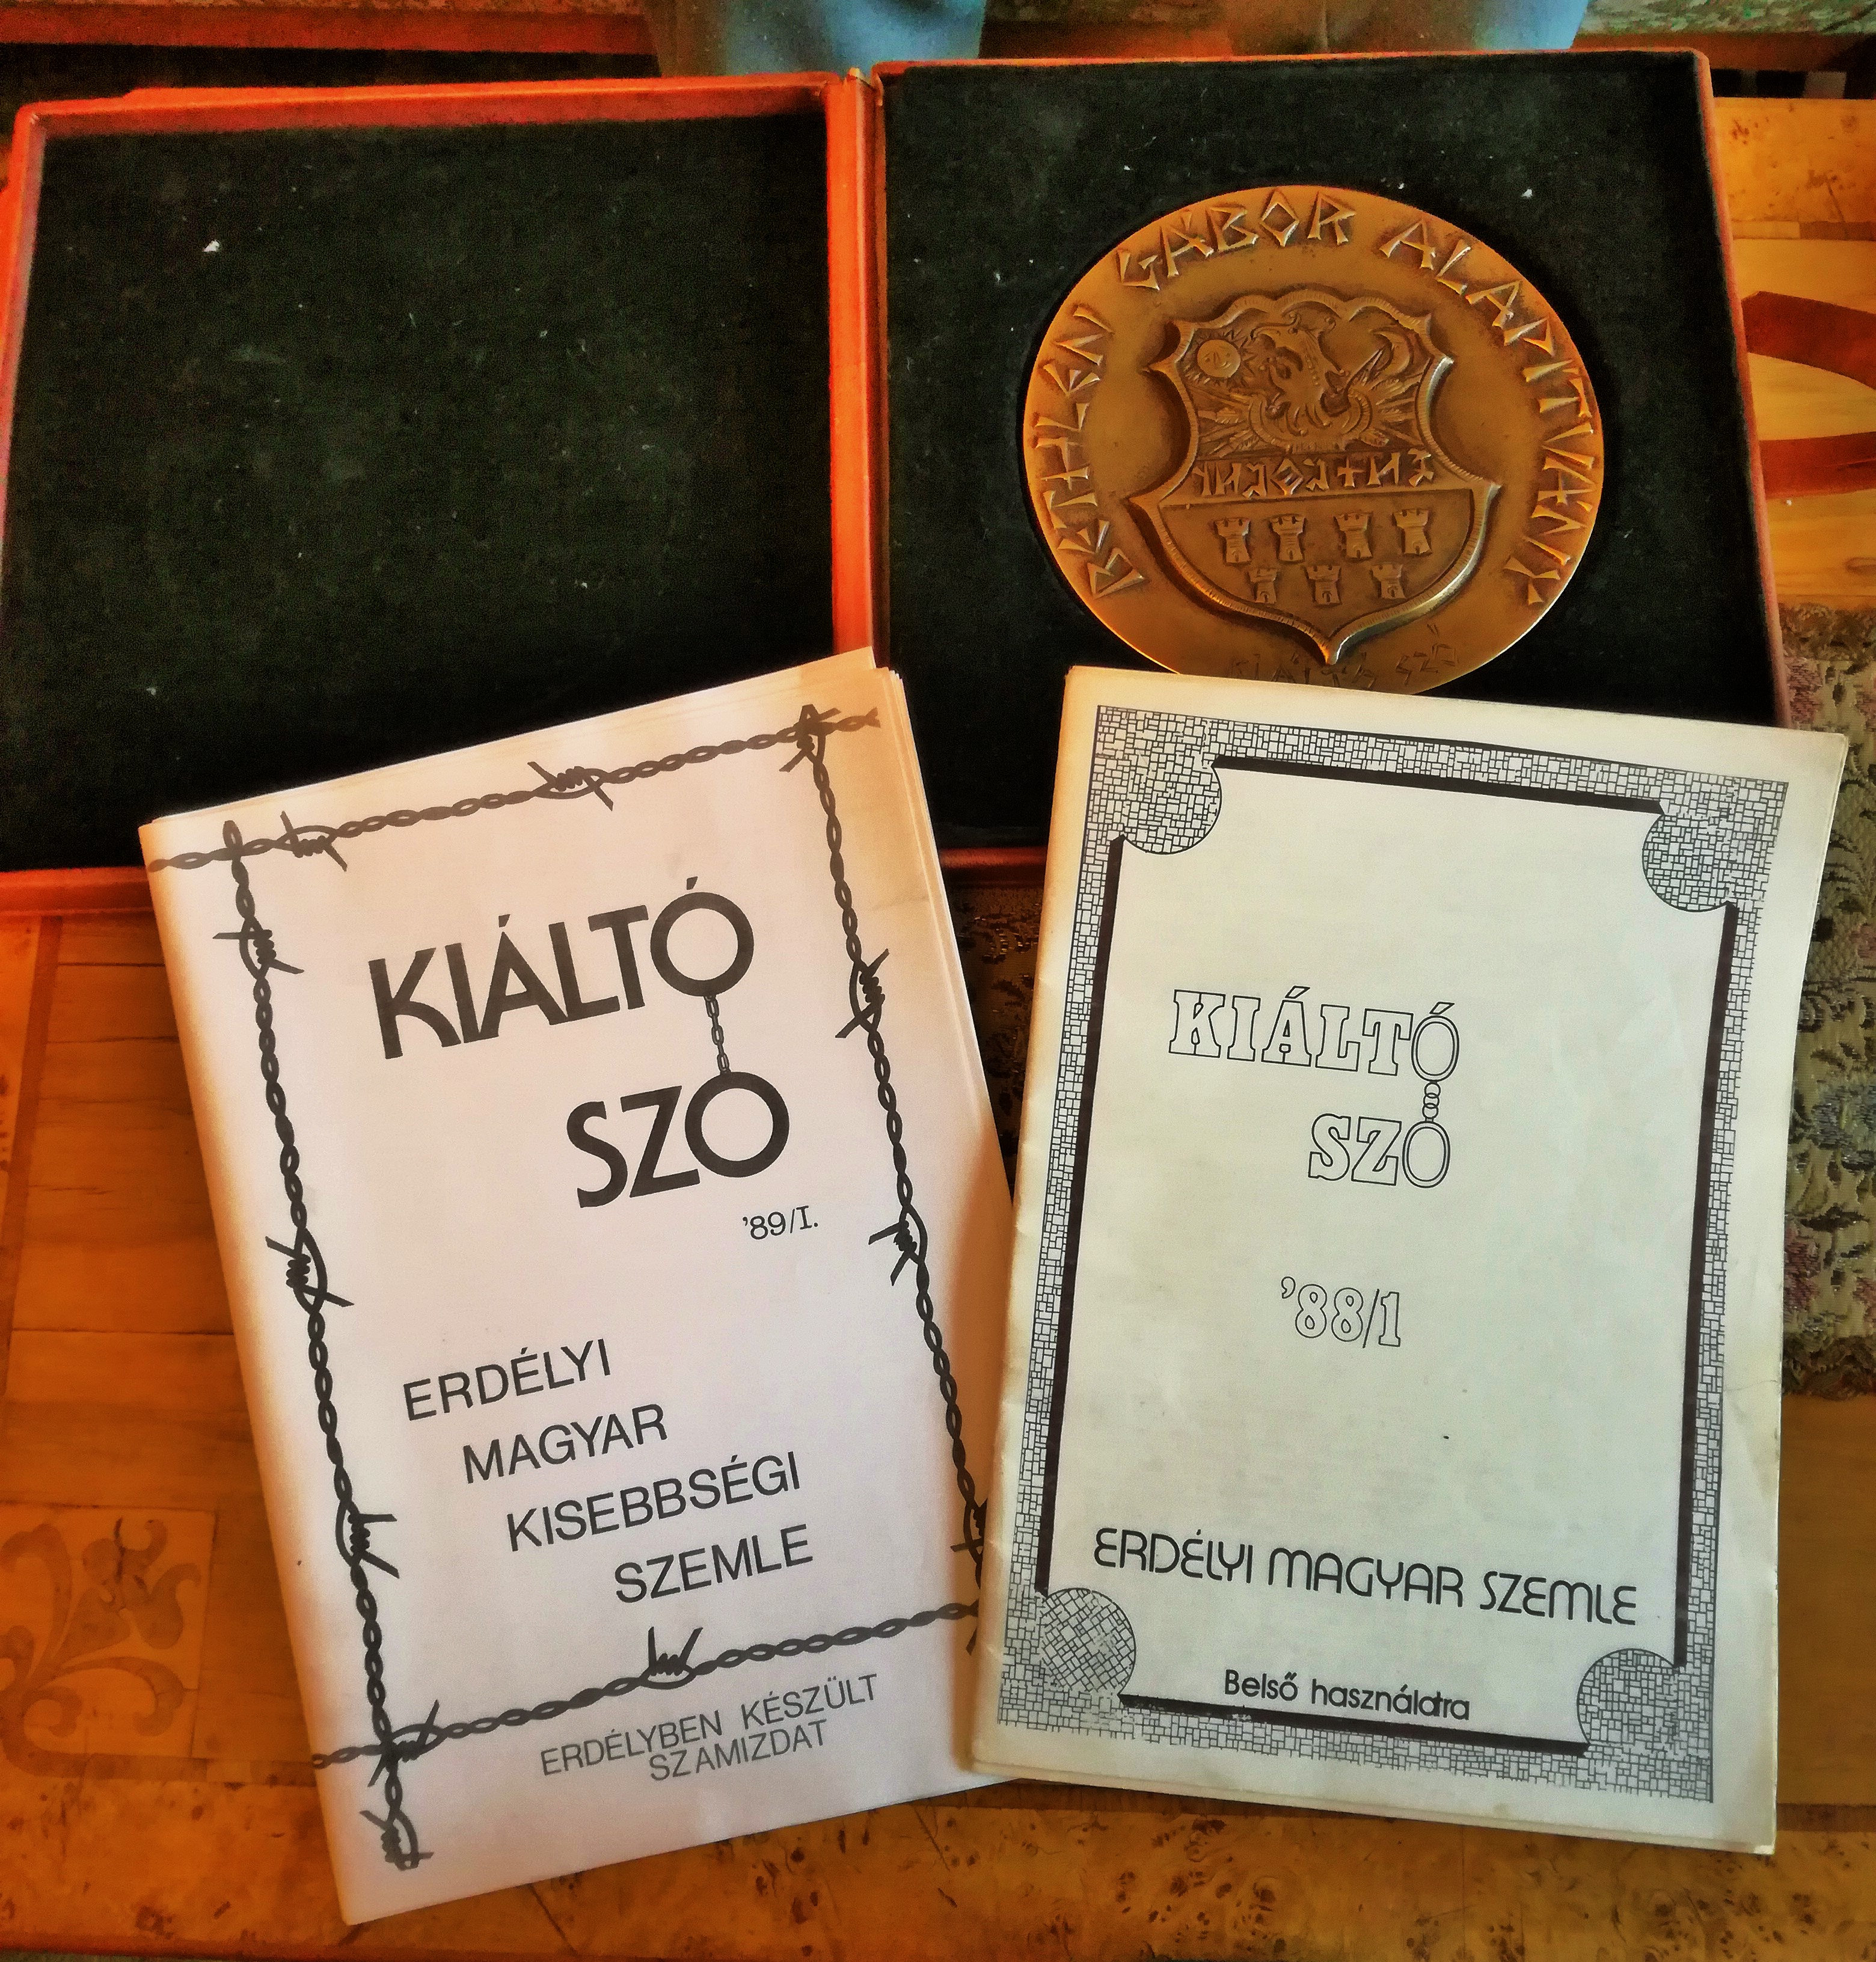 Items of the Kiáltó Szó – Sándor Balázs Private Collection